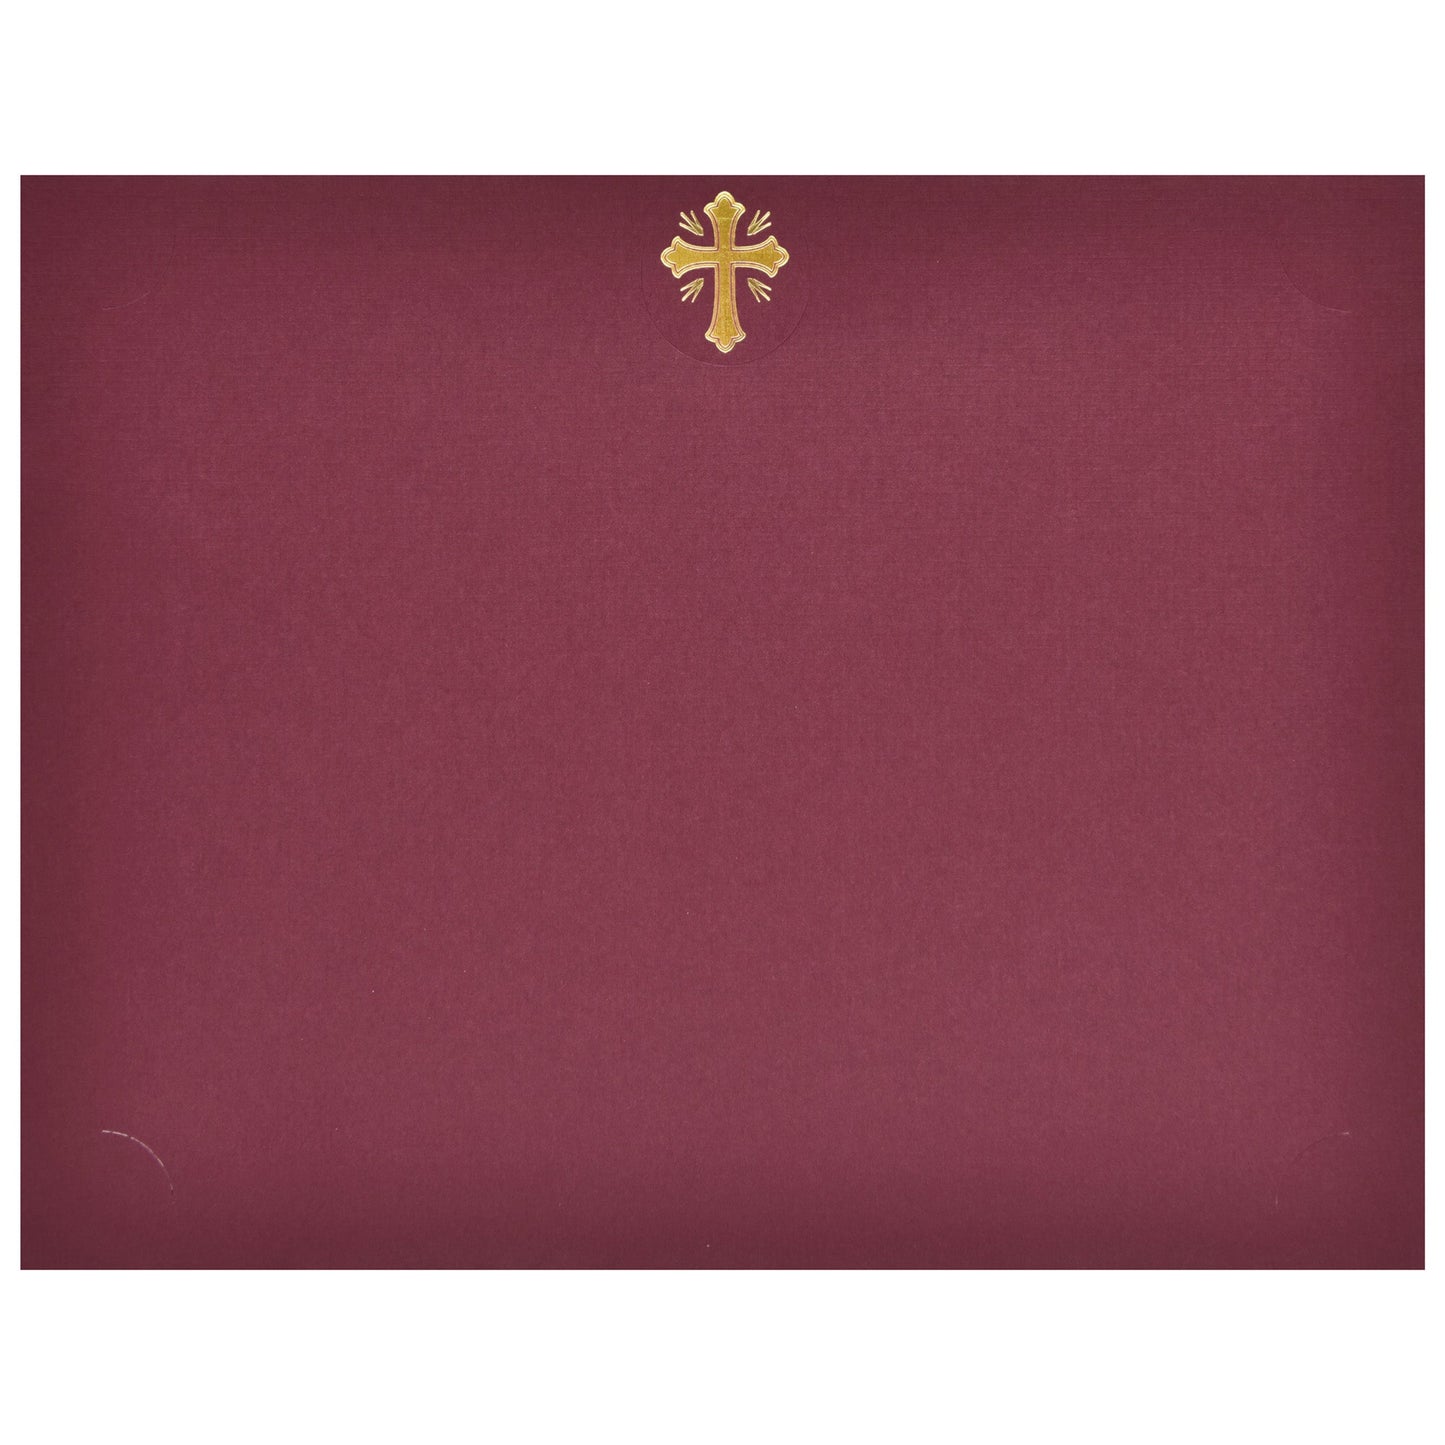 St. James® Presentation Cards/Certificate Holder with Gold Foil Crucifix, Burgundy Linen, Pack of 25